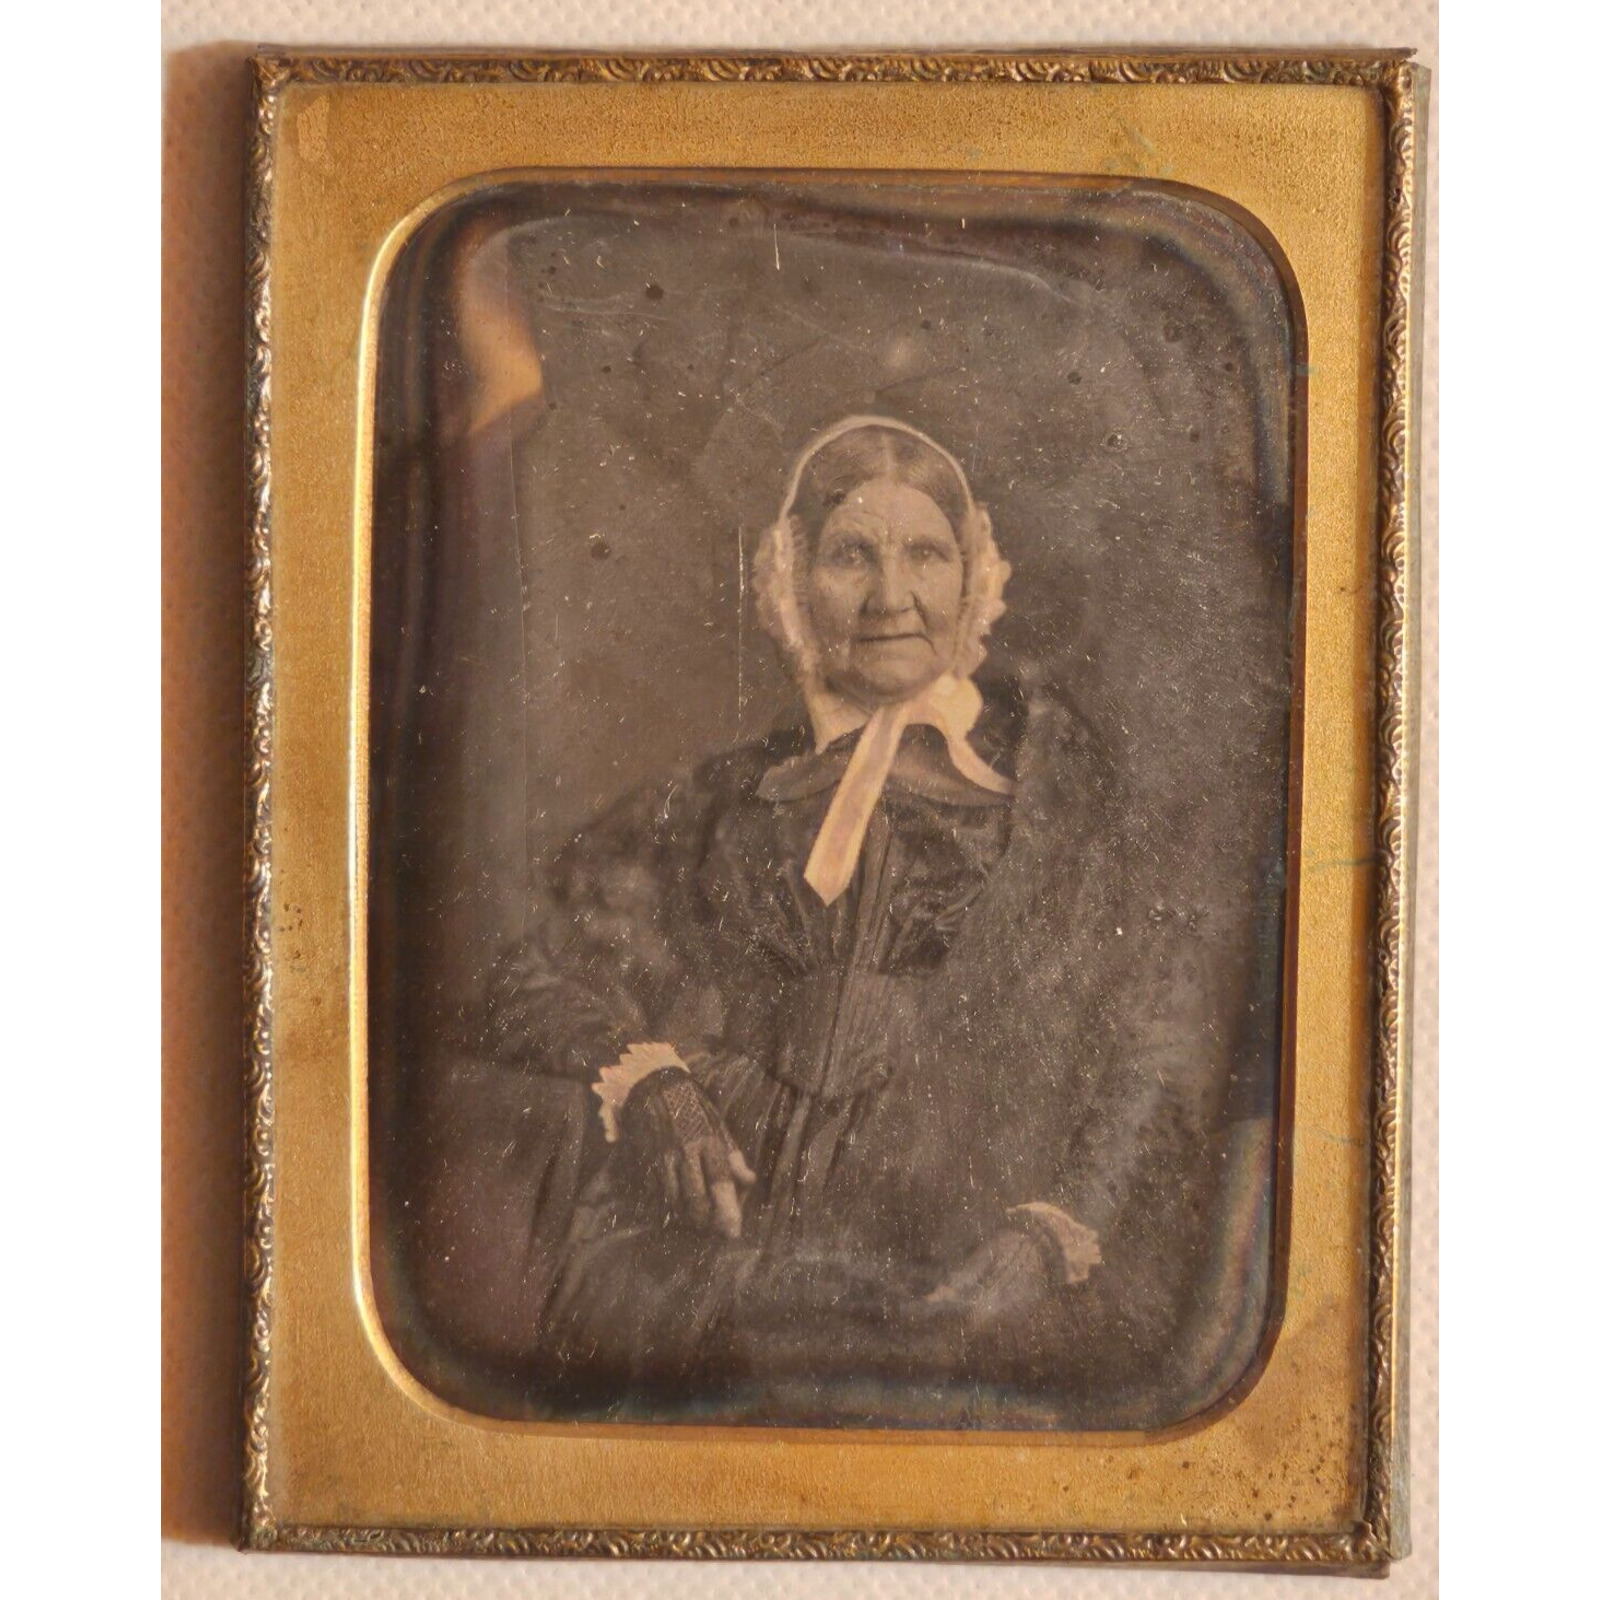 Very Nice 1/4th Plate Daguerreotype Of An Elderly Woman